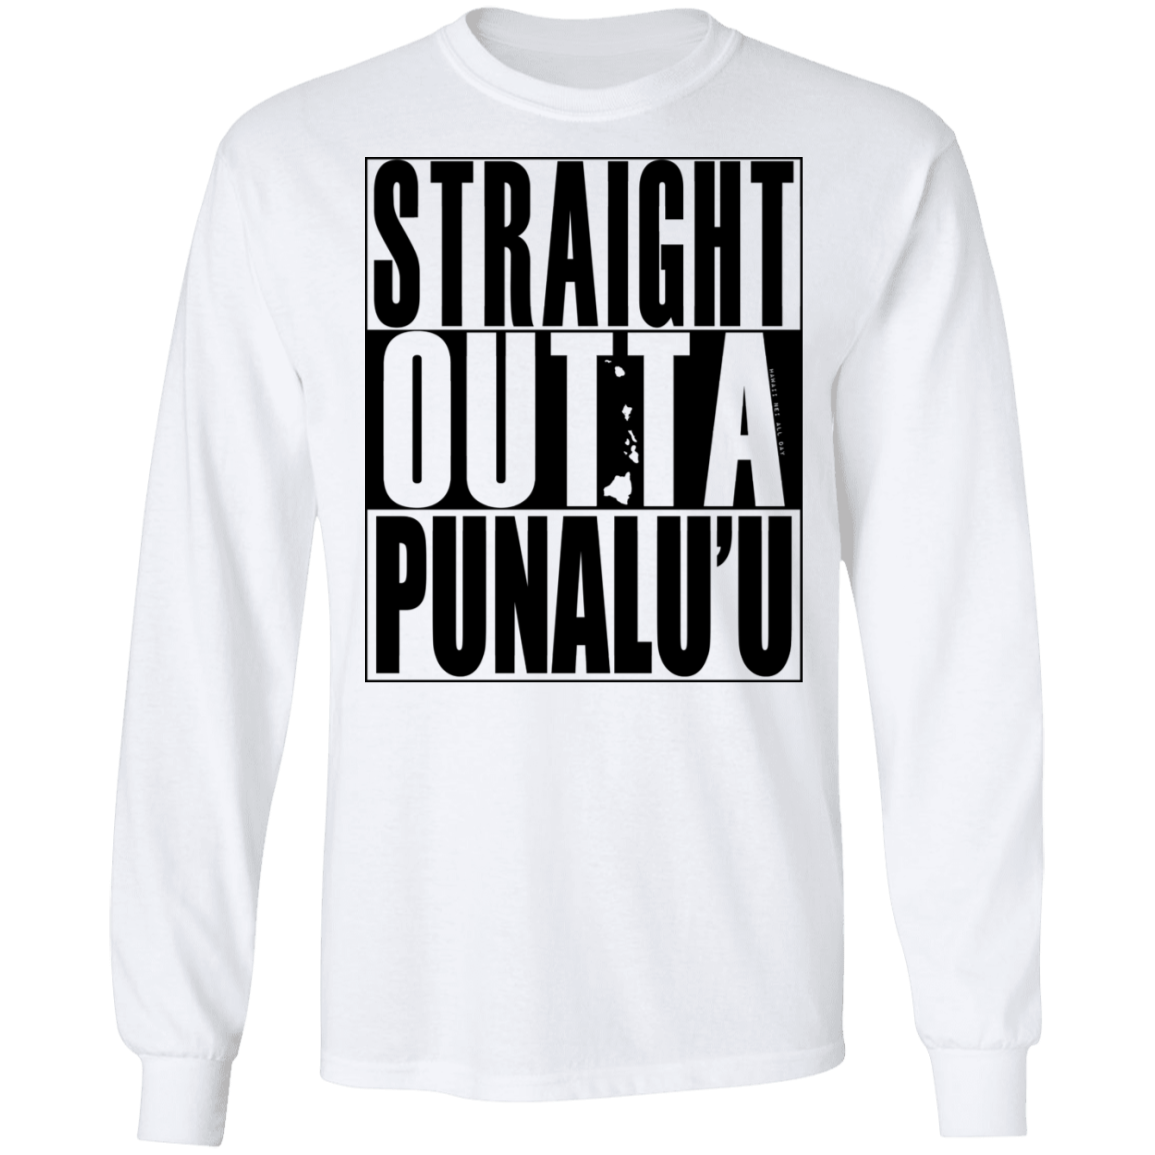 Straight Outta Punalu'u(black ink) LS T-Shirt